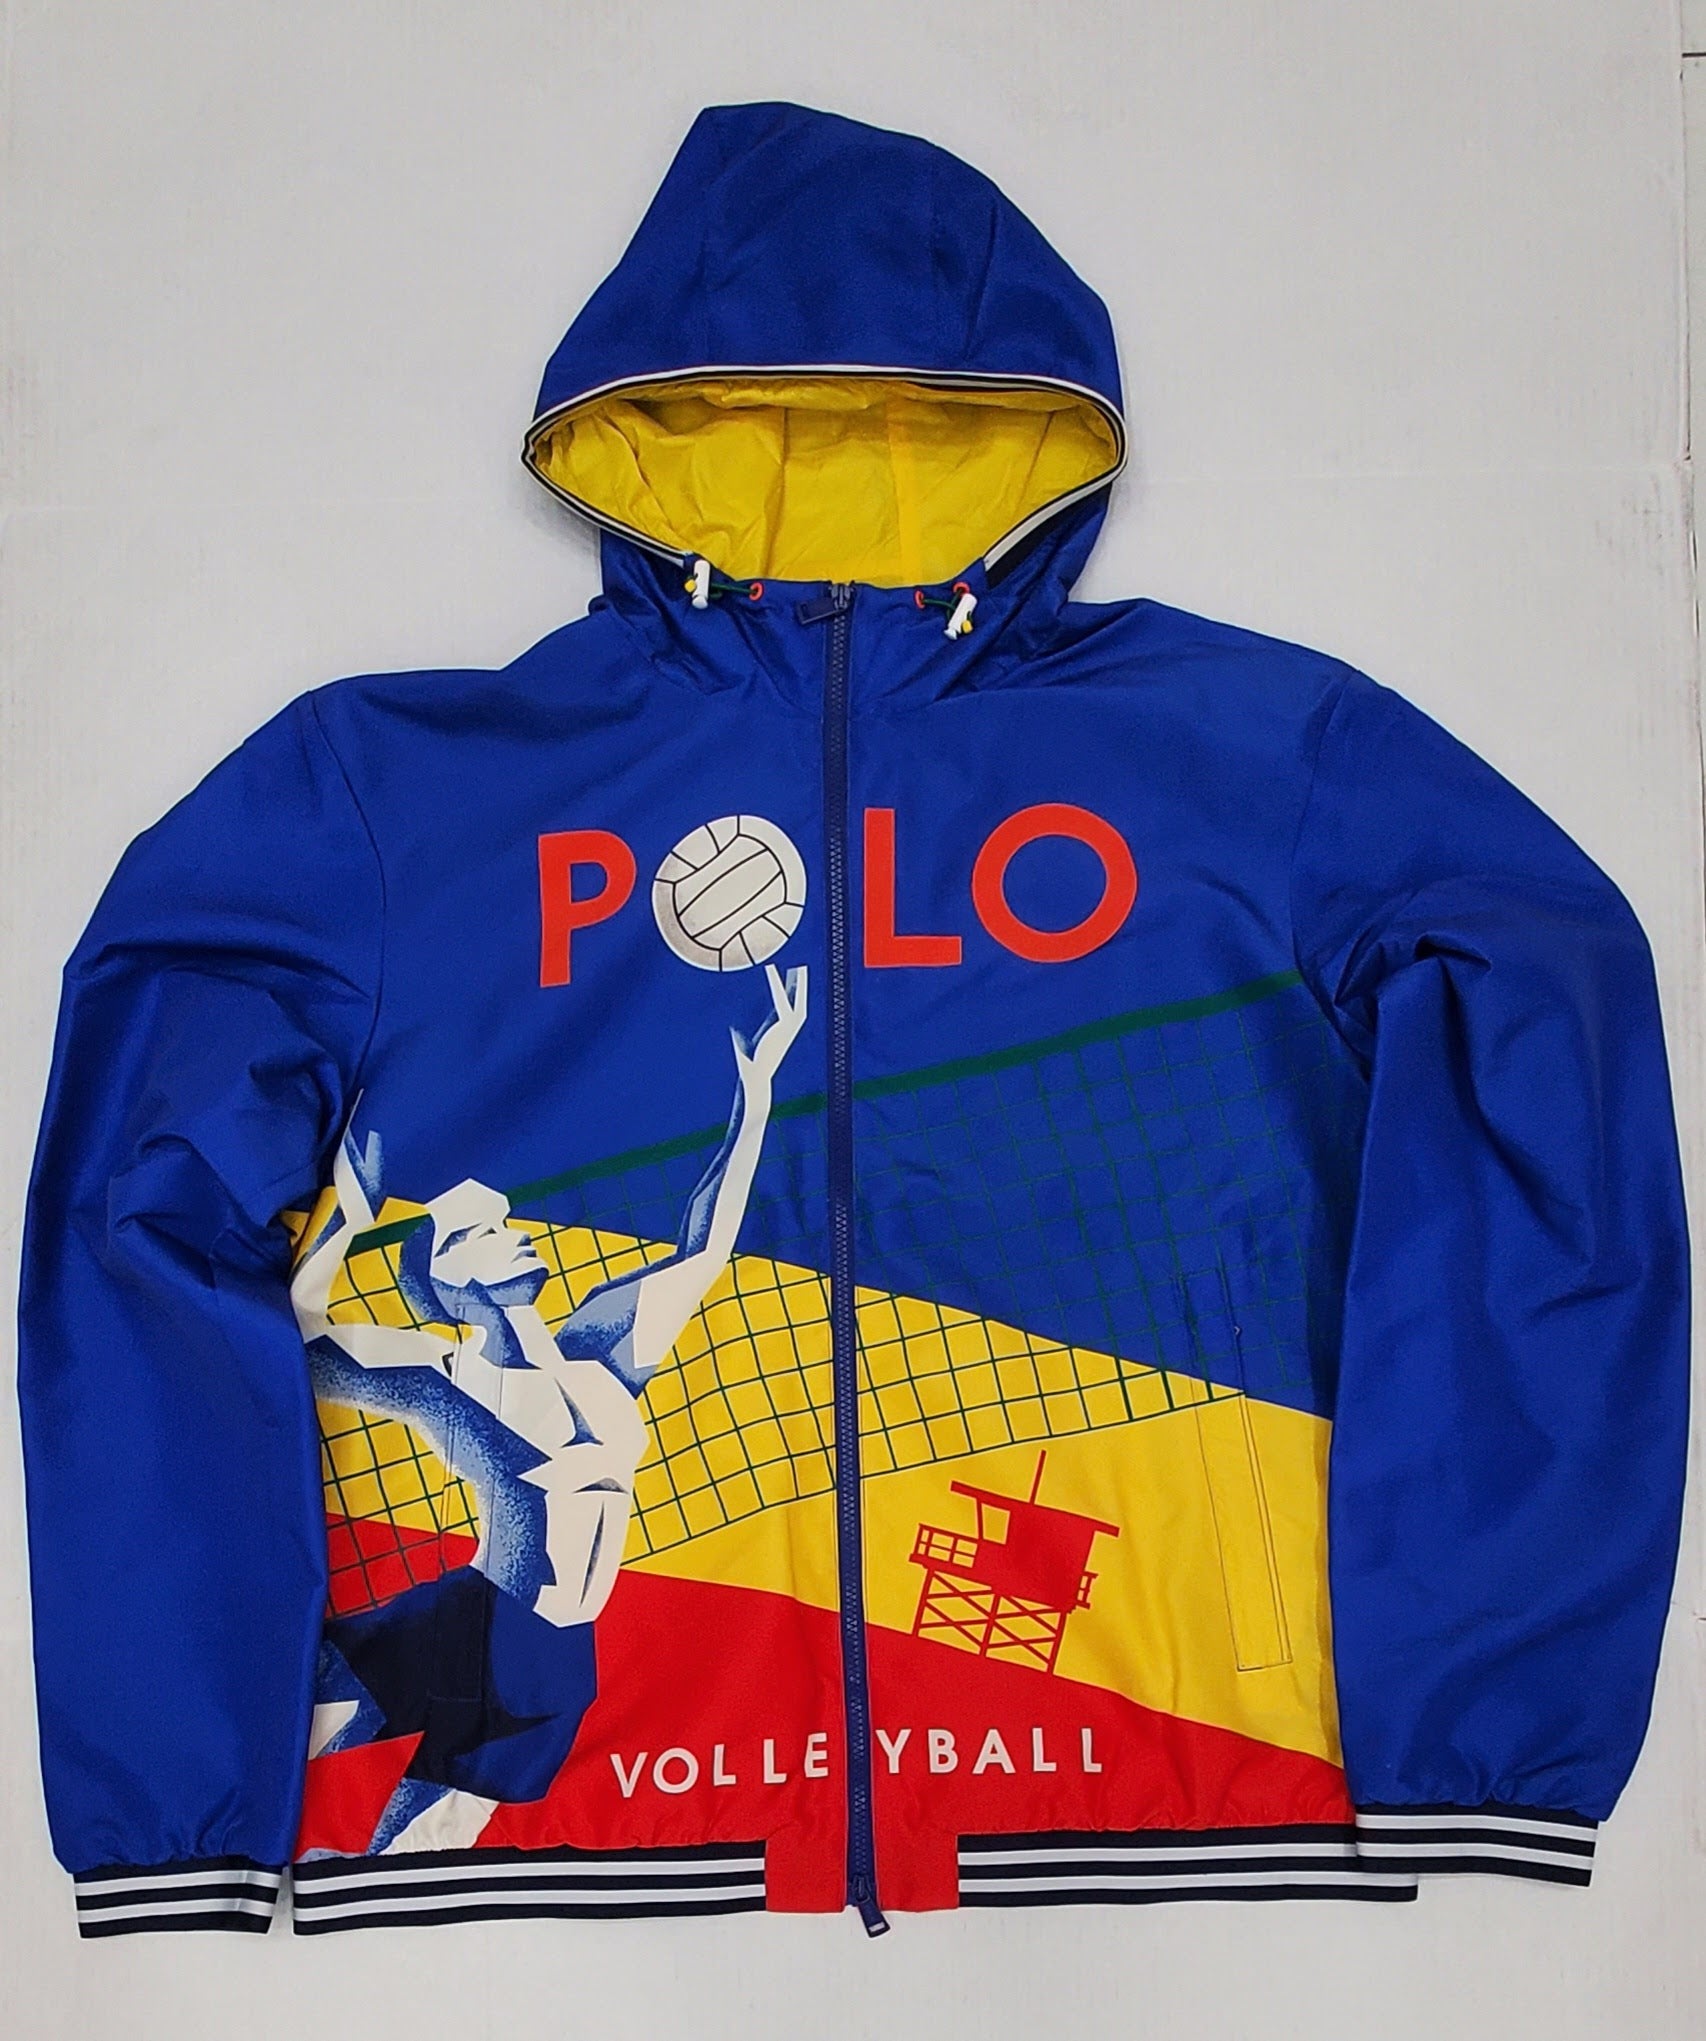 Polo Ralph Lauren New York Yankee Collection (Jacket, Hoodies